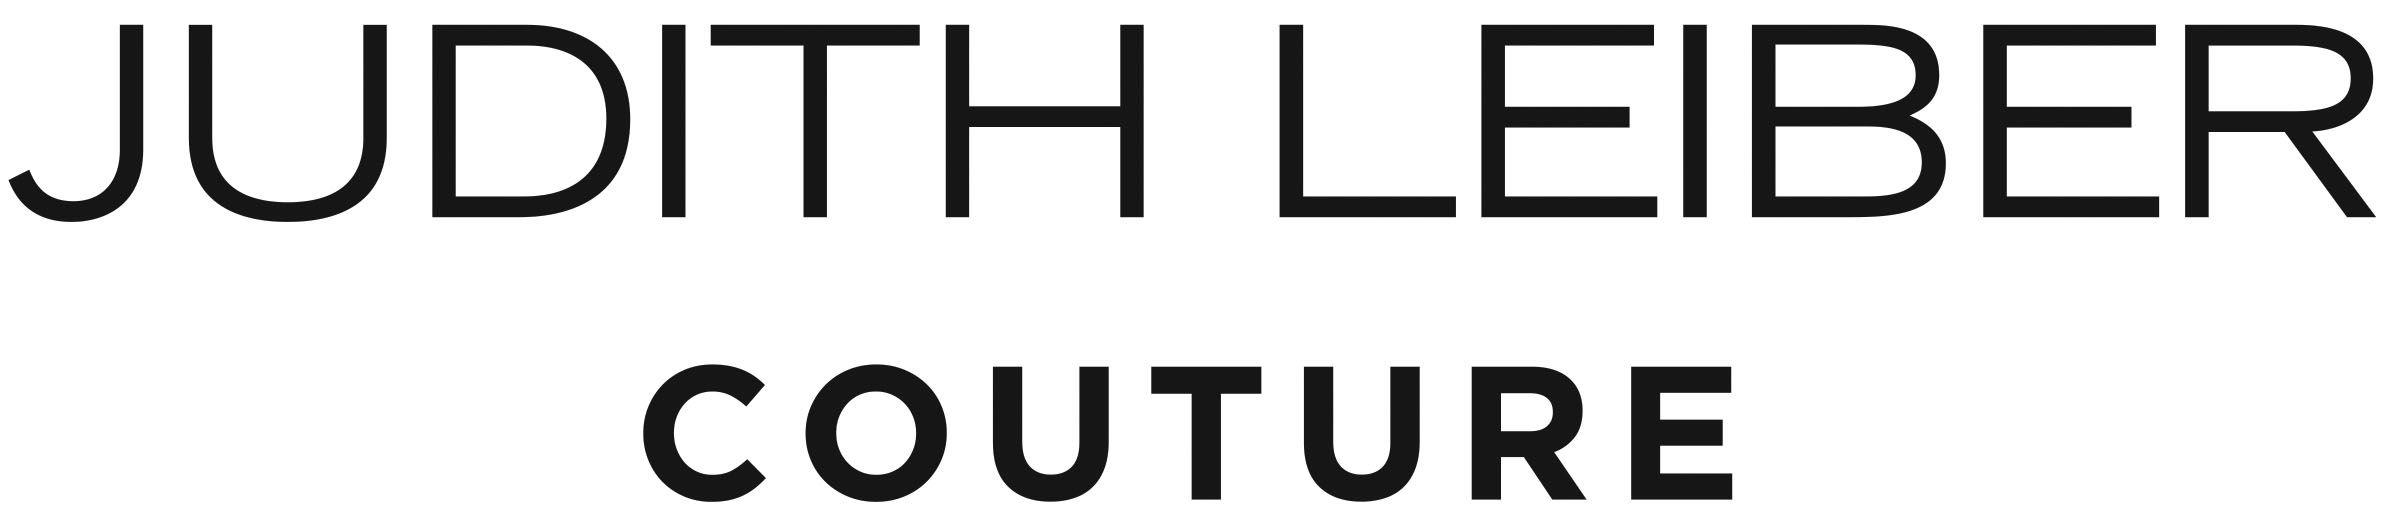 Judith Leiber Logo - Judith Leiber Couture - Design Gallery